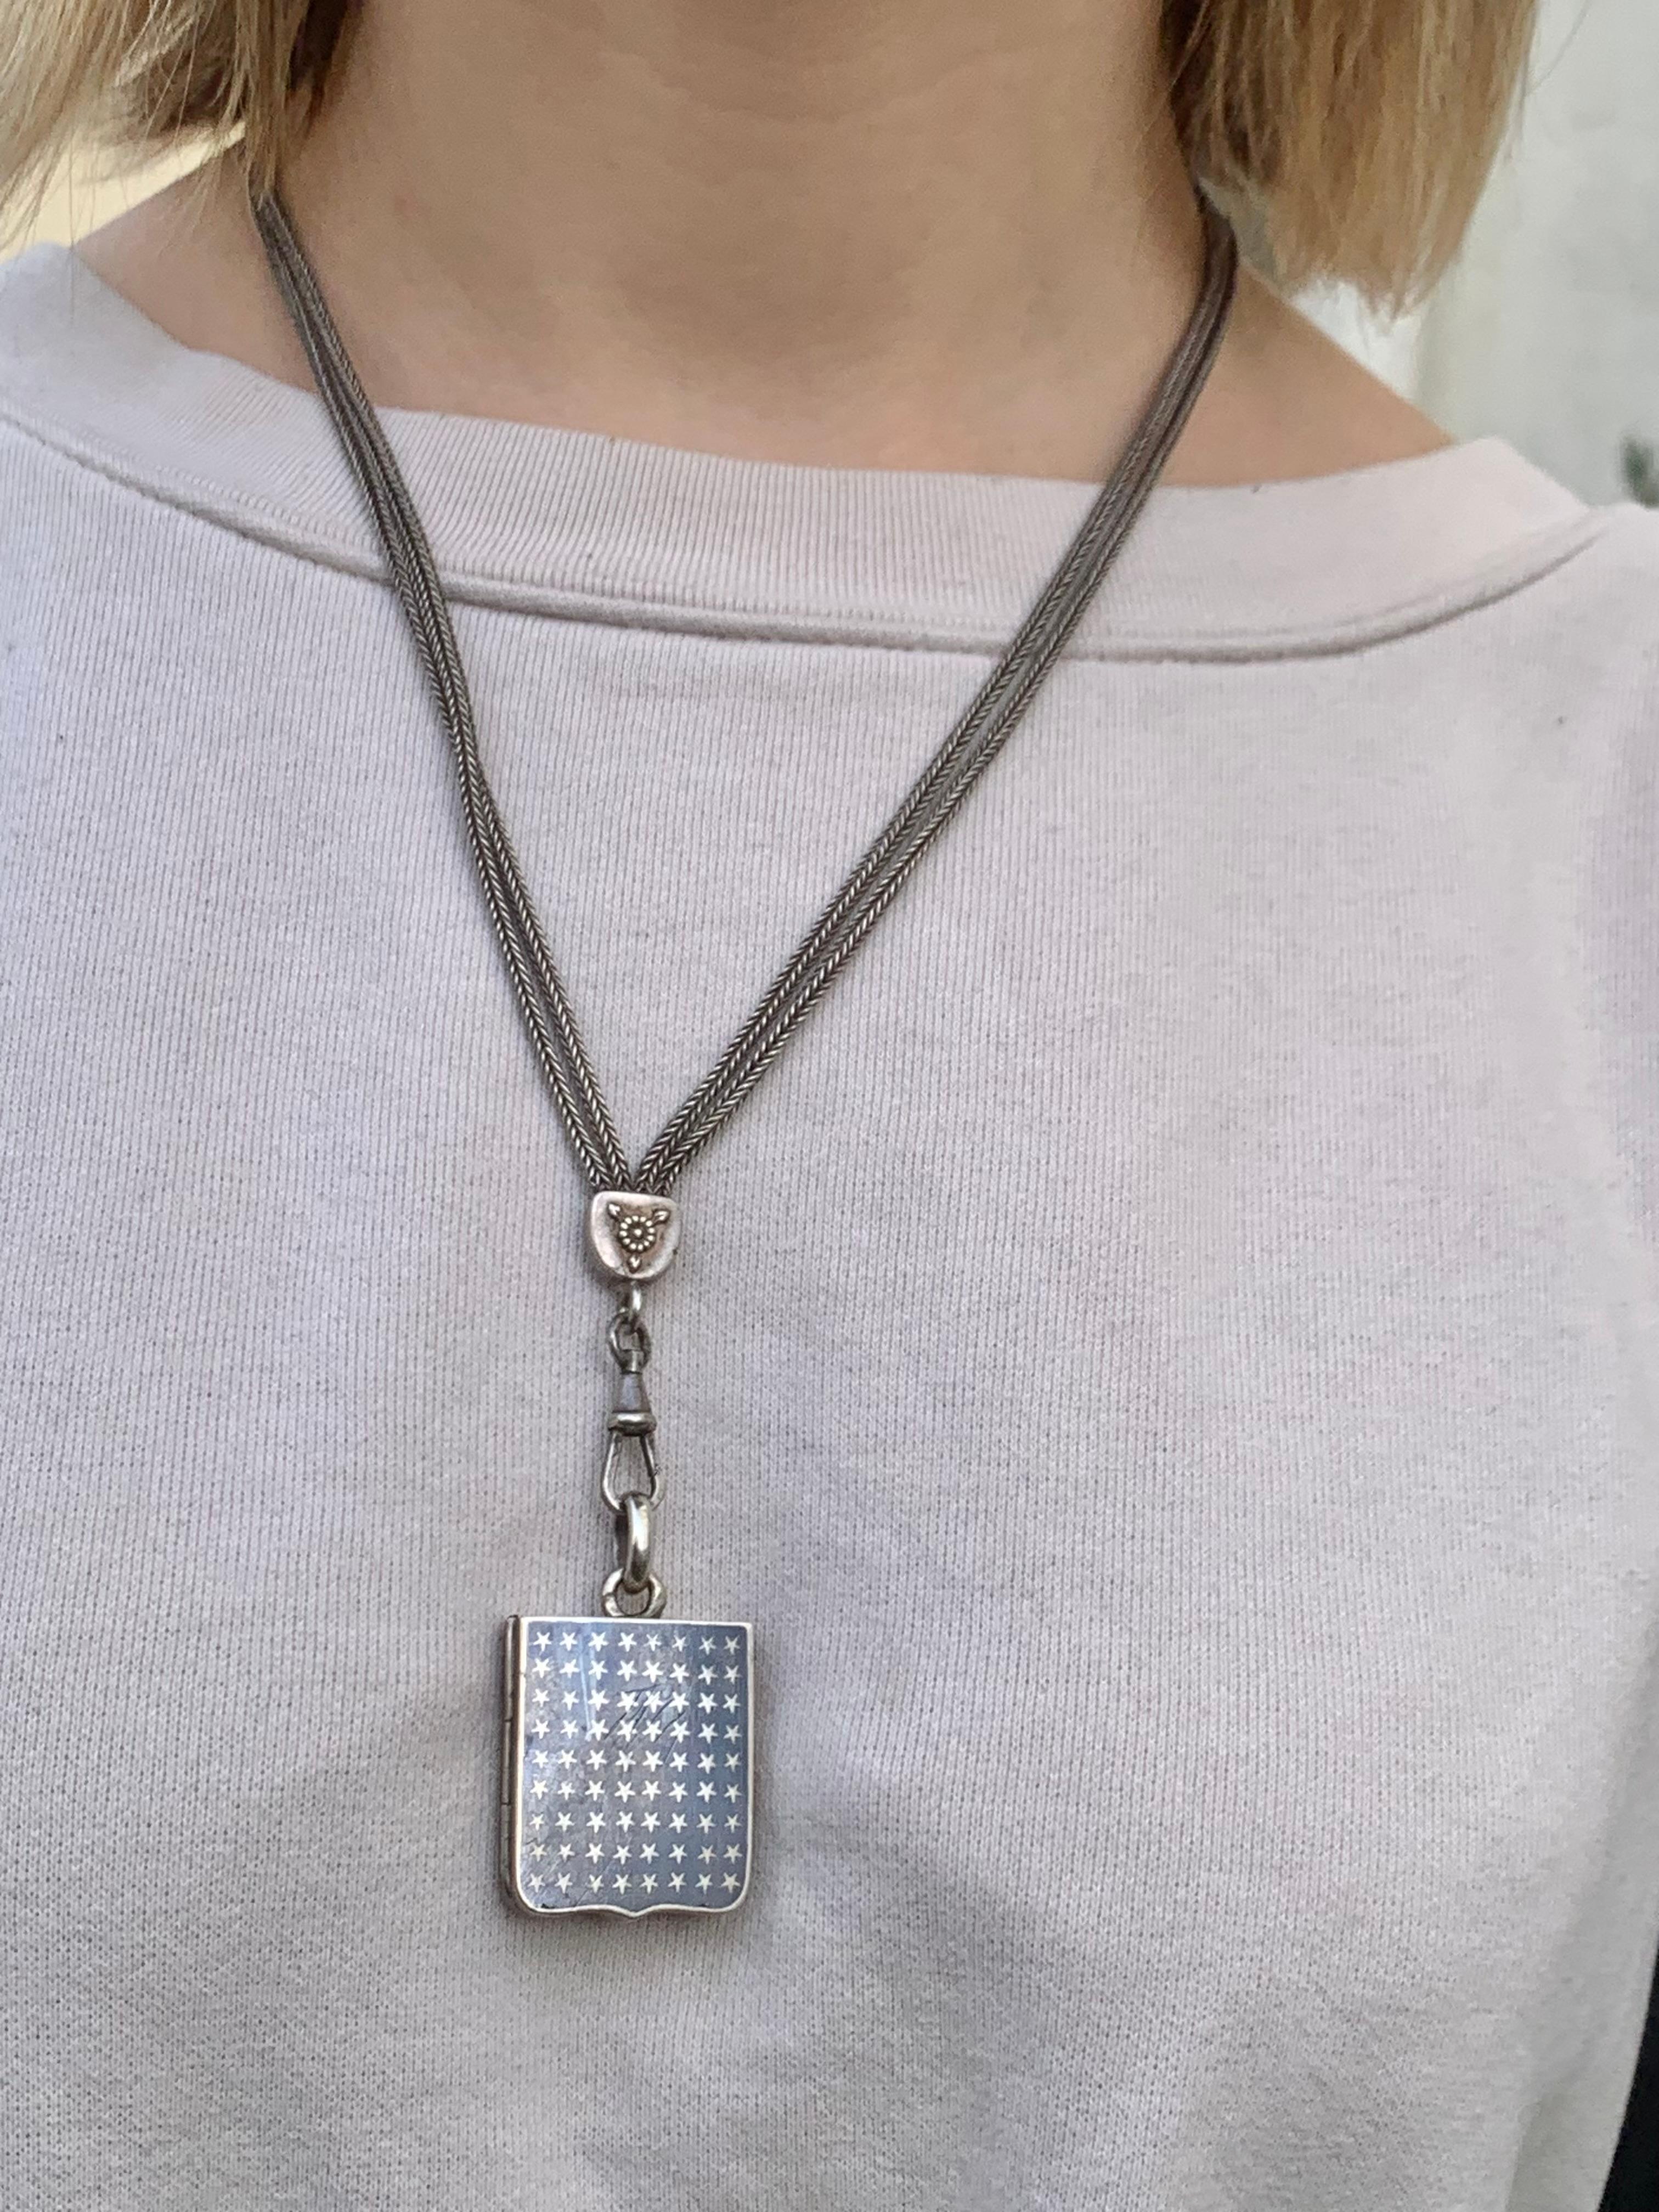 Women's Antique Silver Niello Locket Pendant Necklace Stars Initials A W For Sale